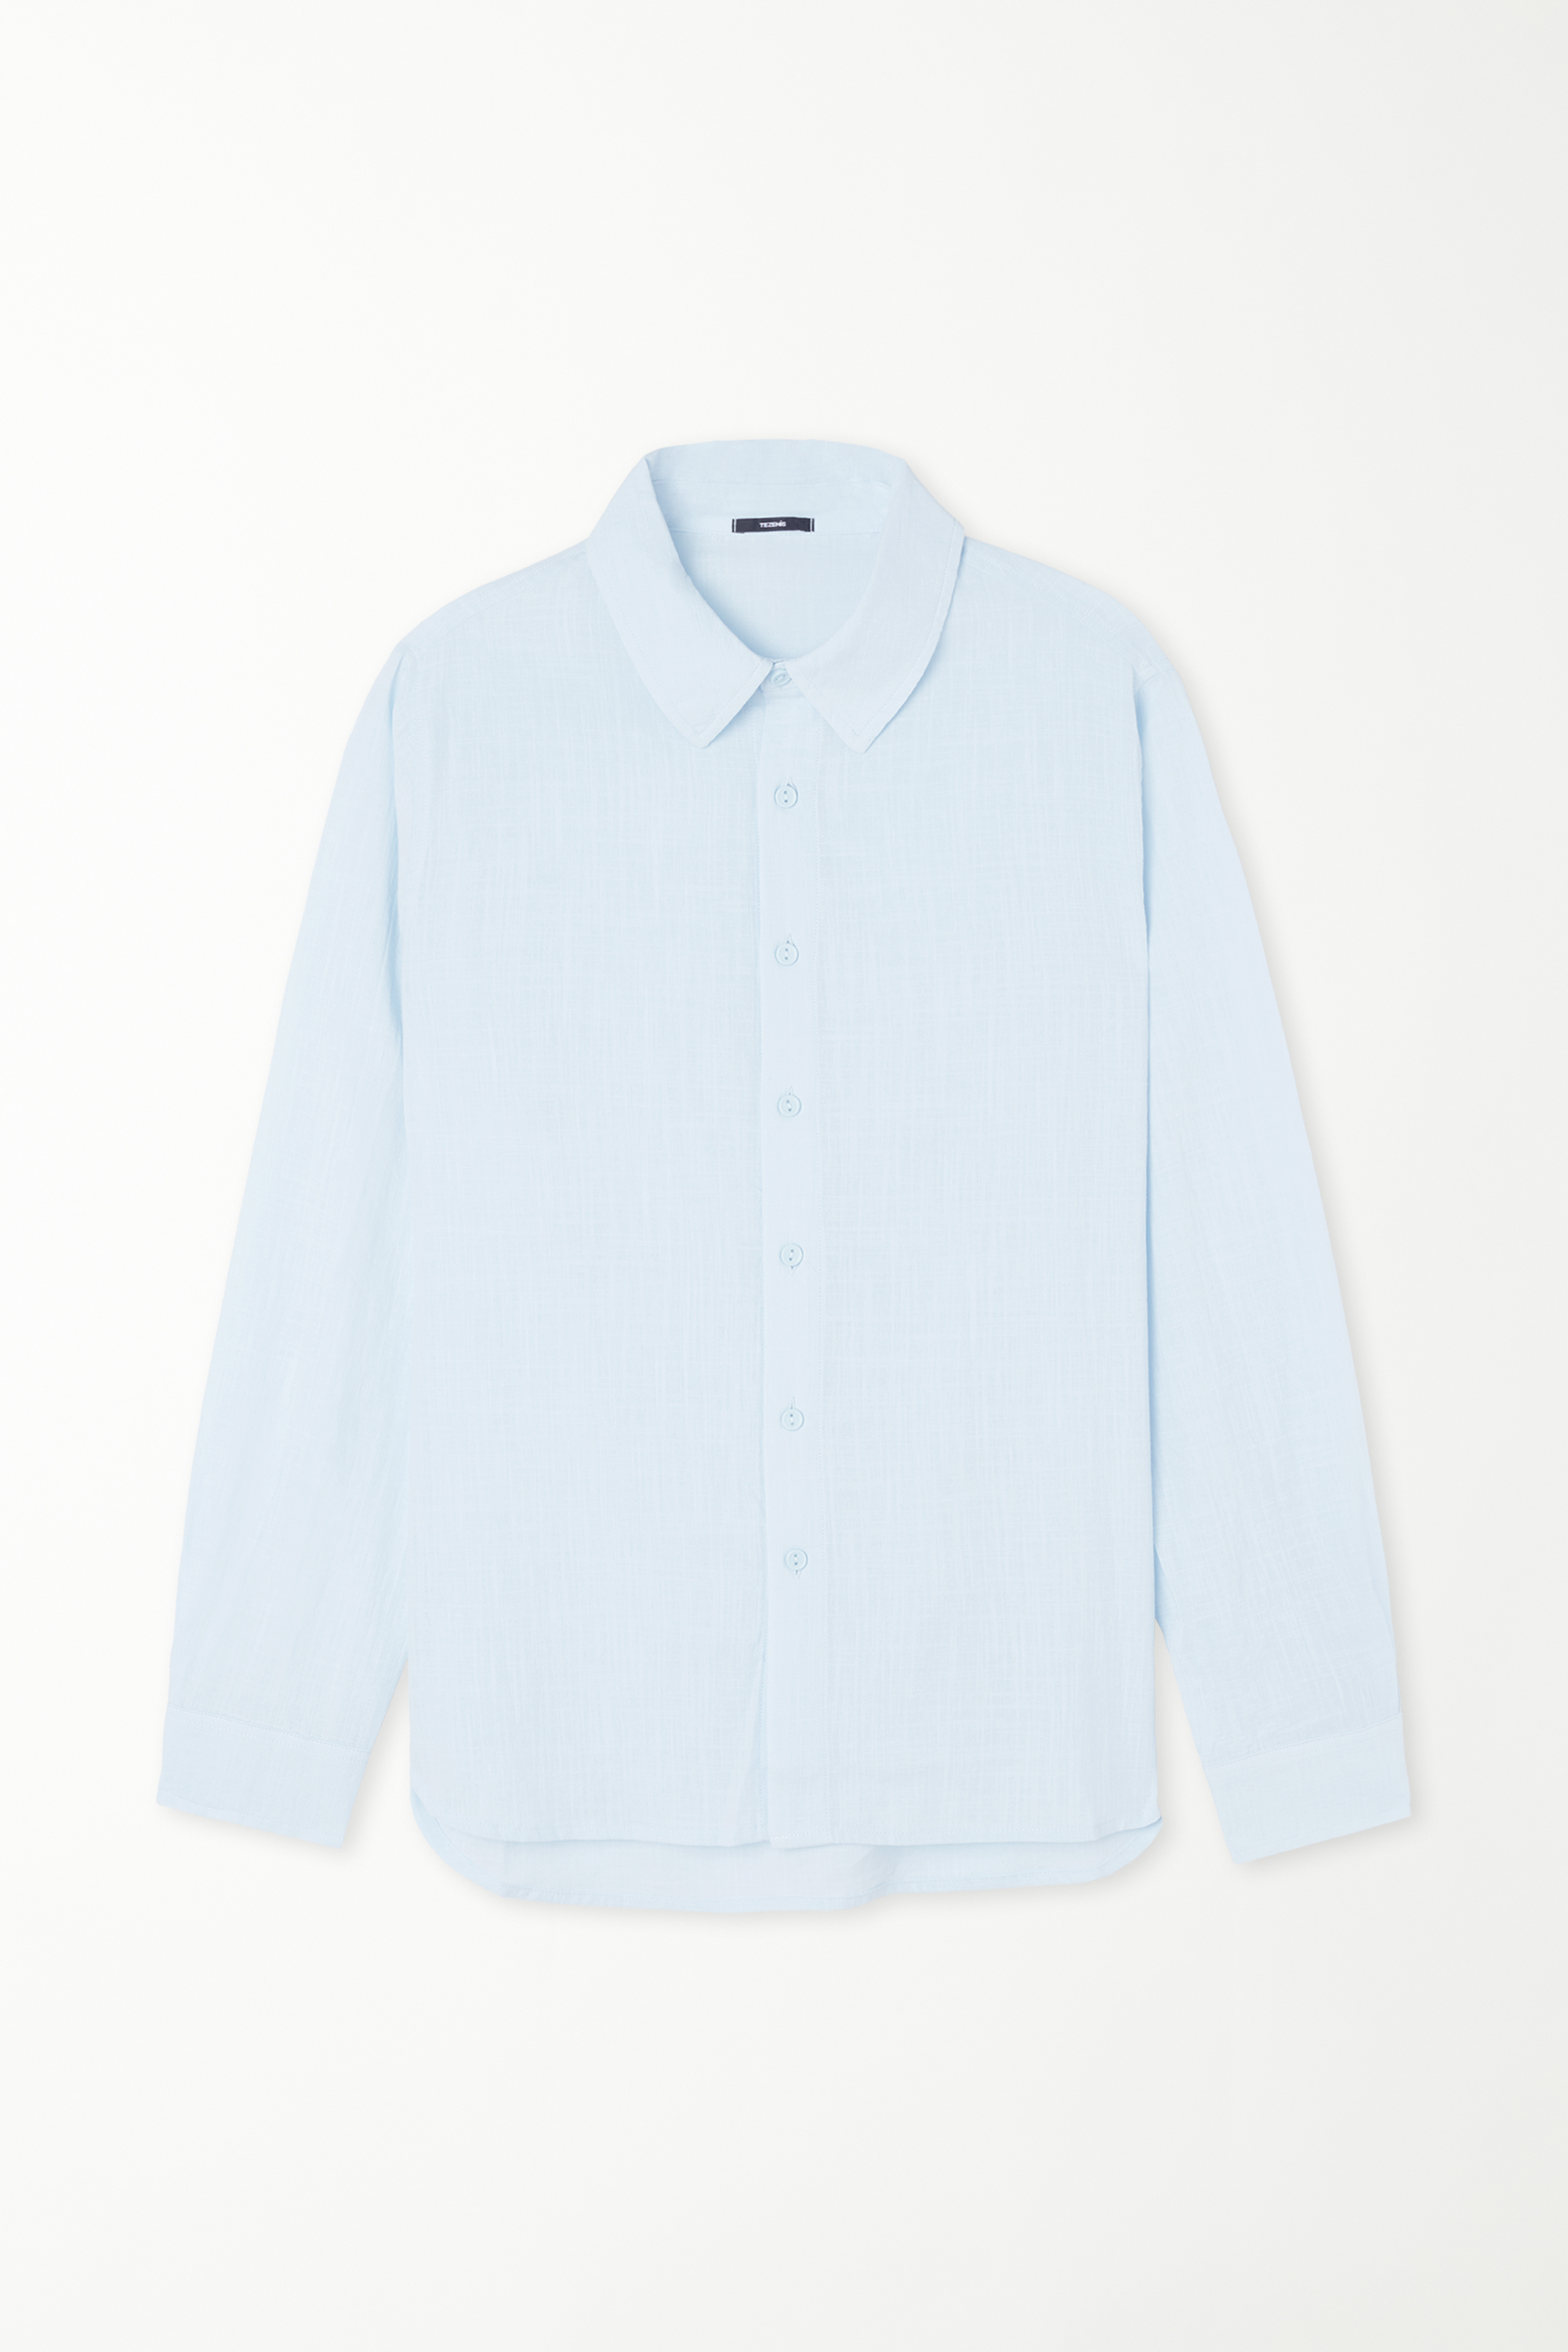 Long Sleeve 100% Cotton Cloth Shirt